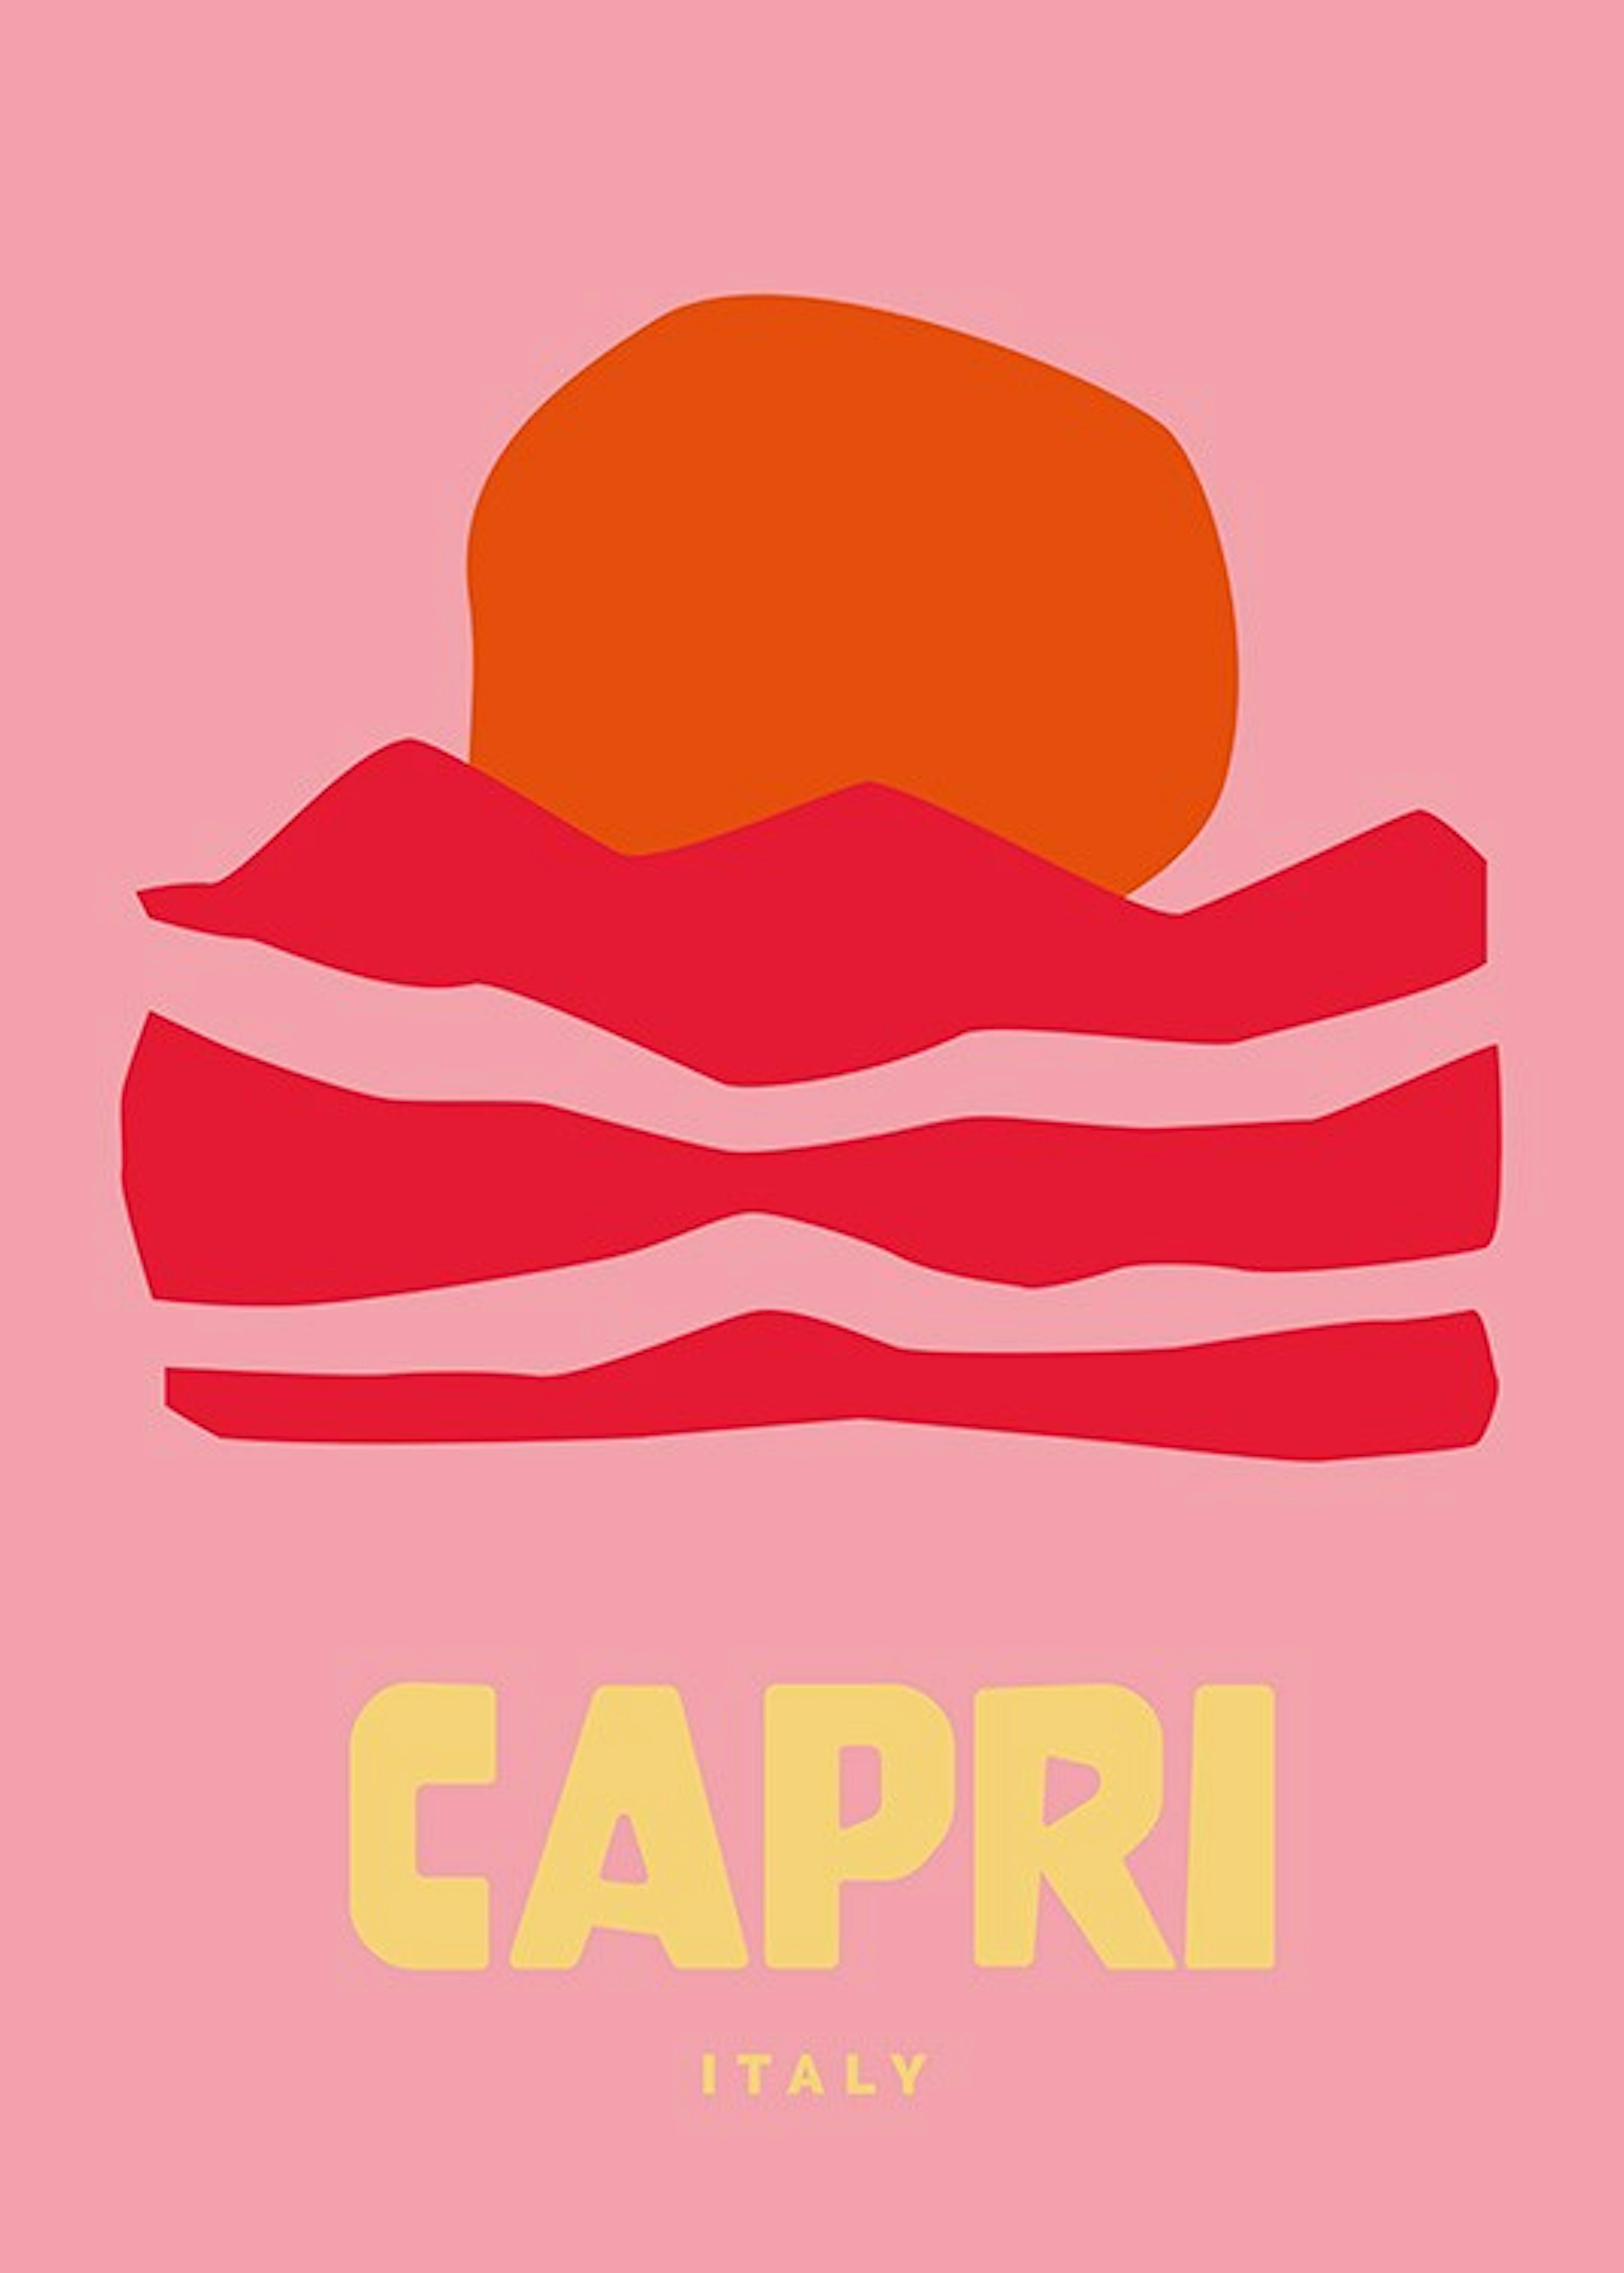 Graphic Capri Plakát 0